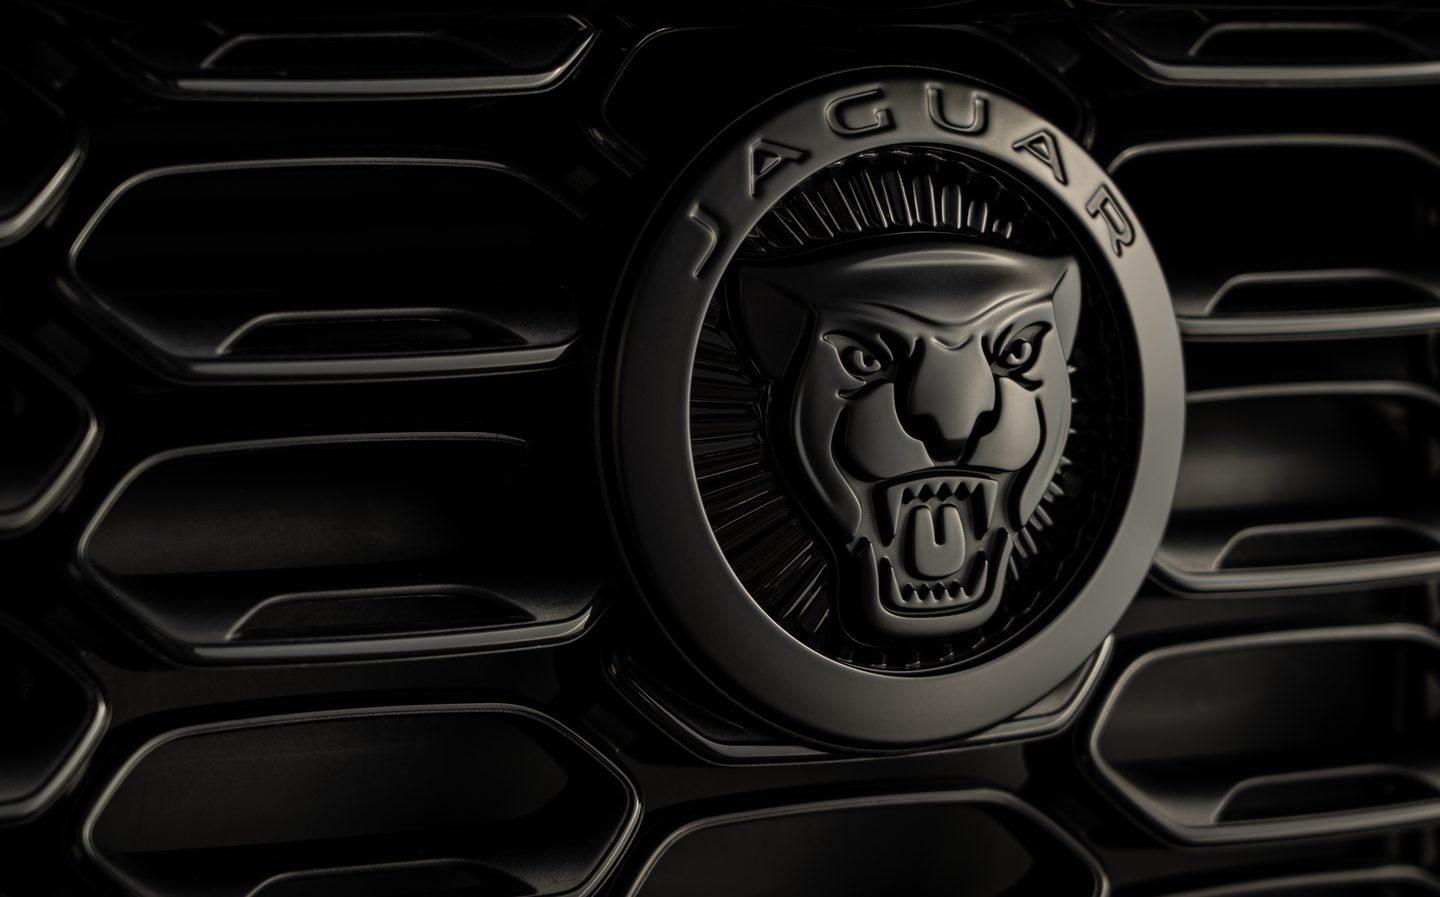 convertible, f-type, jaguar, roadsters, sport, farewell to the jaguar f-type: a final drive of jaguar's stunning sports car